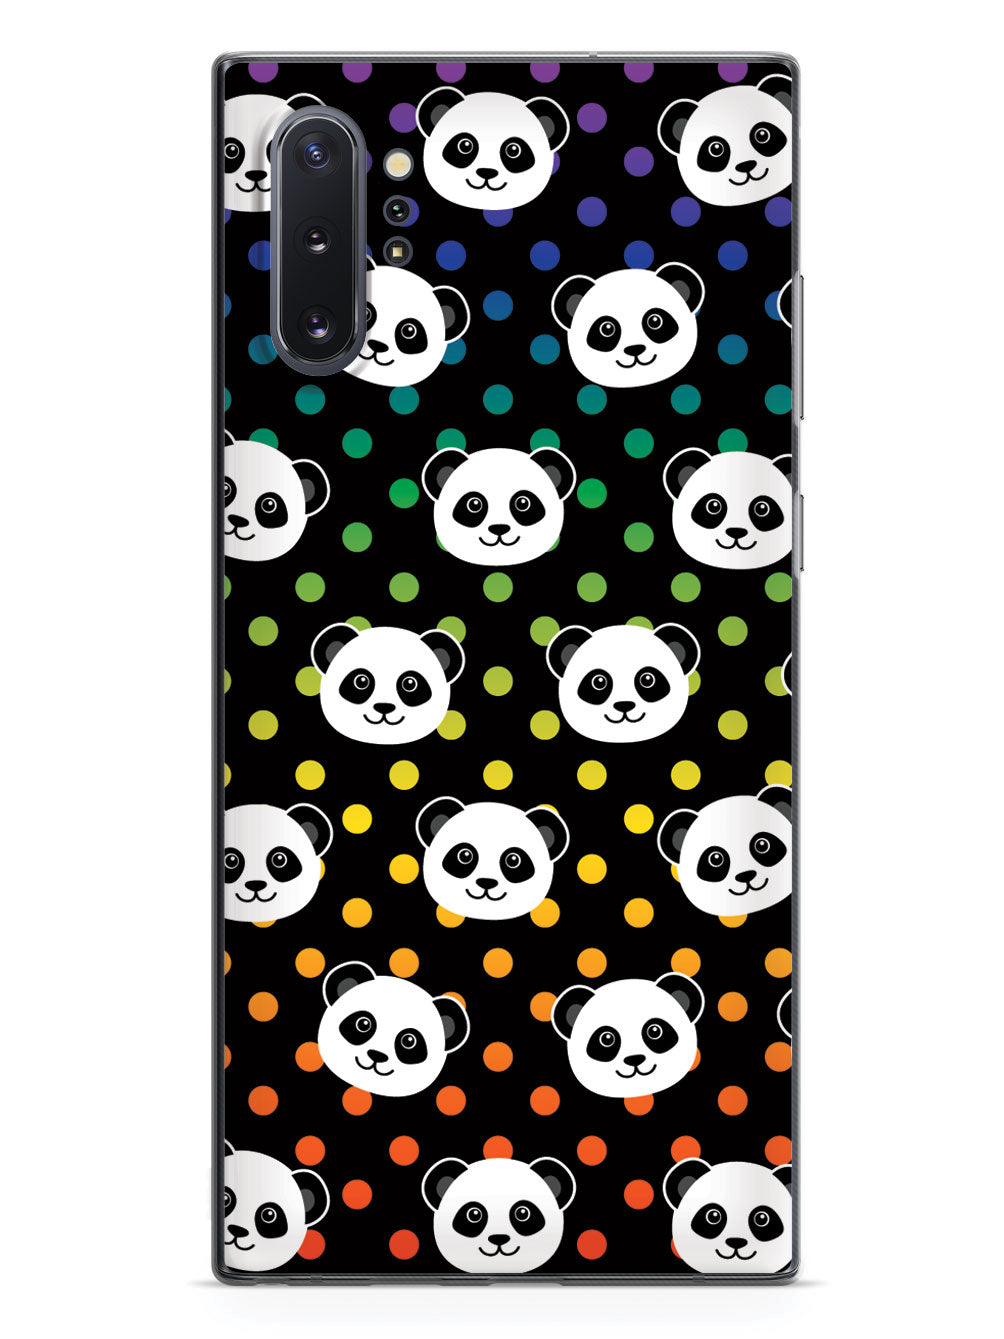 Cute Panda Pattern - Rainbow Polka Dots - Black Case